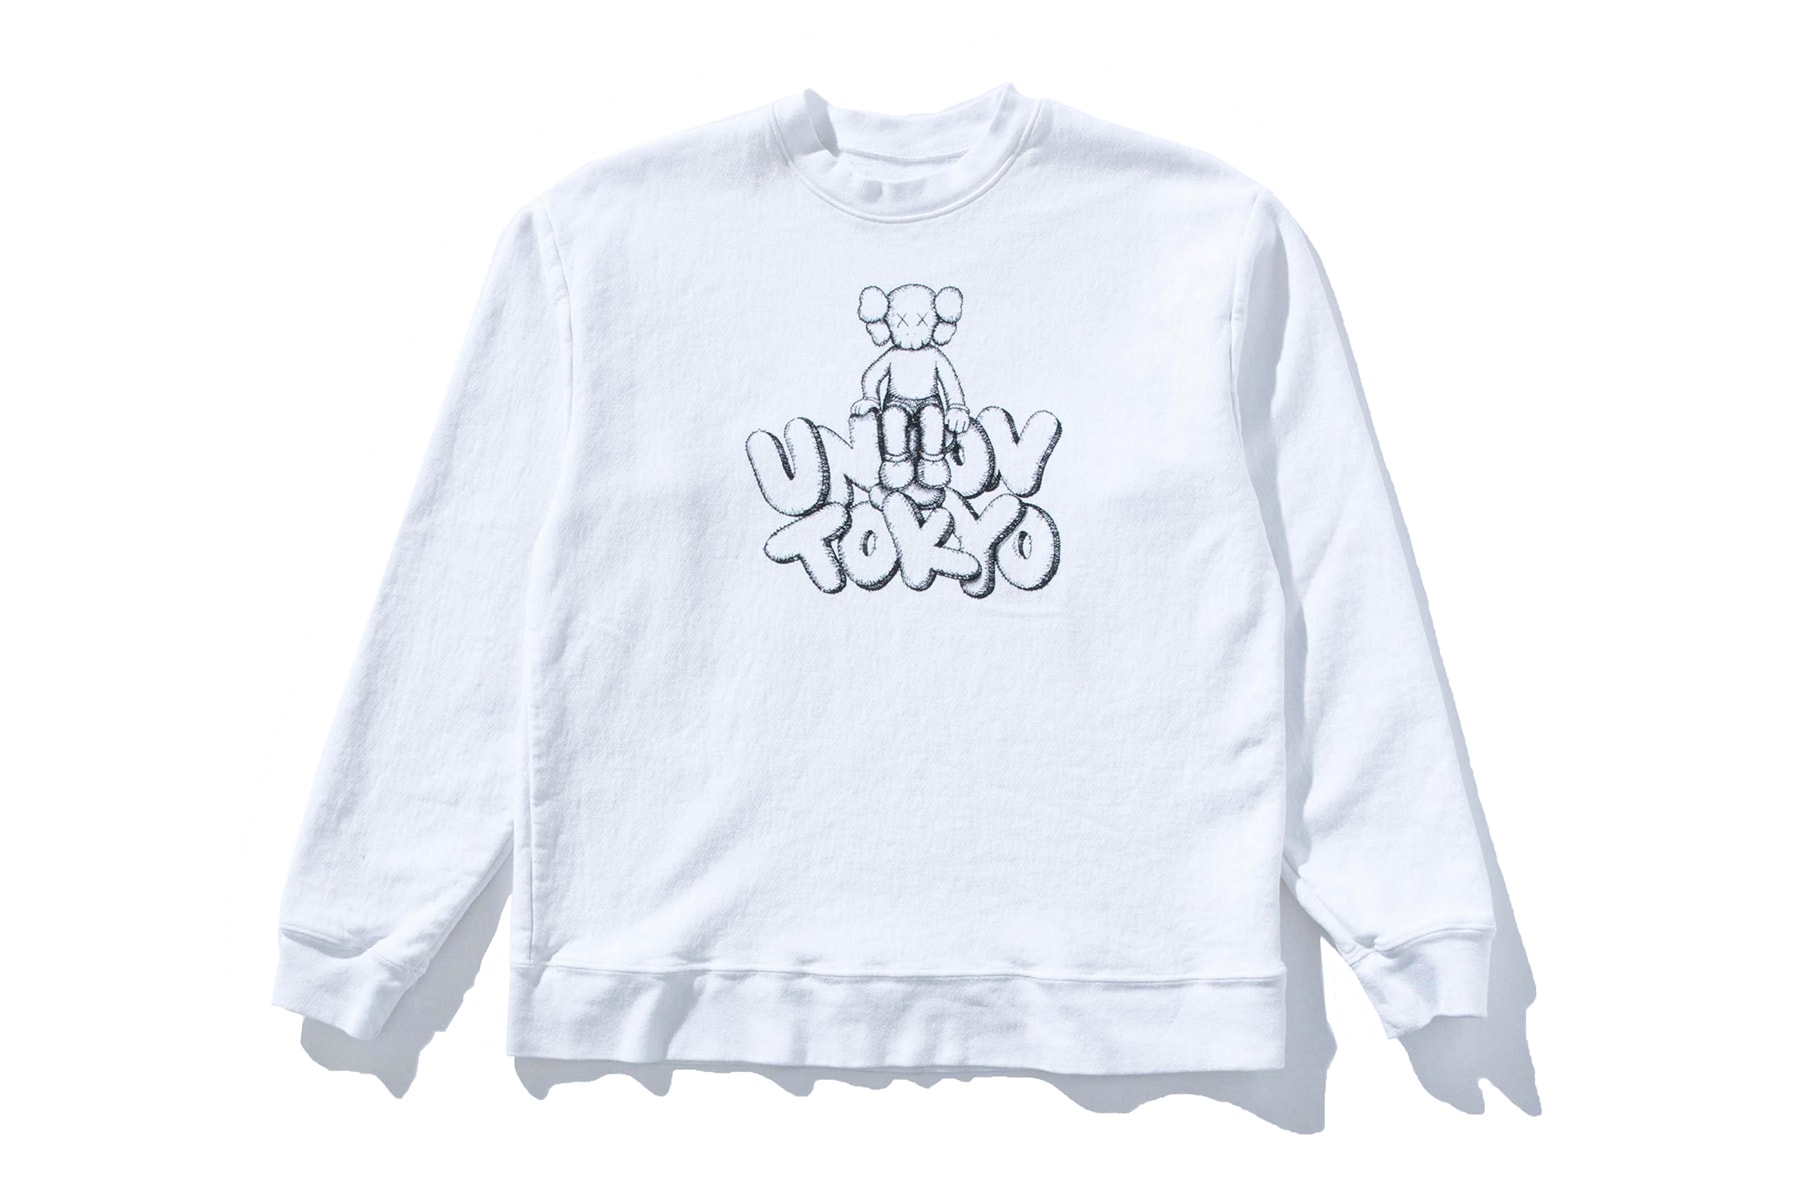 Union tokyo kaws collaboration capsule clothing t shirt los angeles drop celebration april 27 30 2018 drop release date info closer look